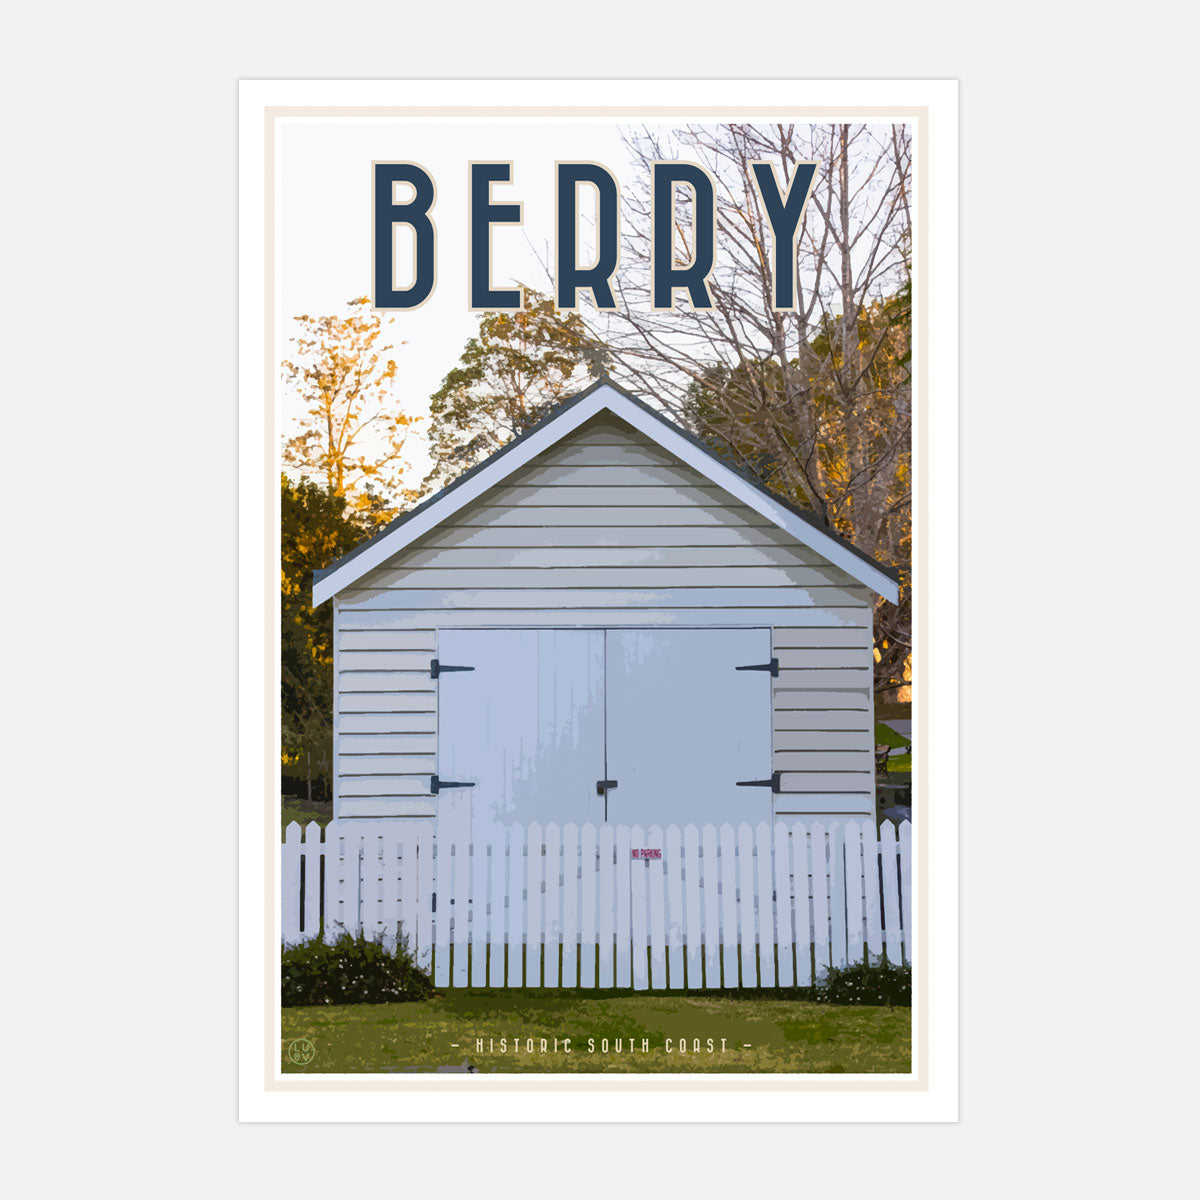 Berry south coast village travel style print